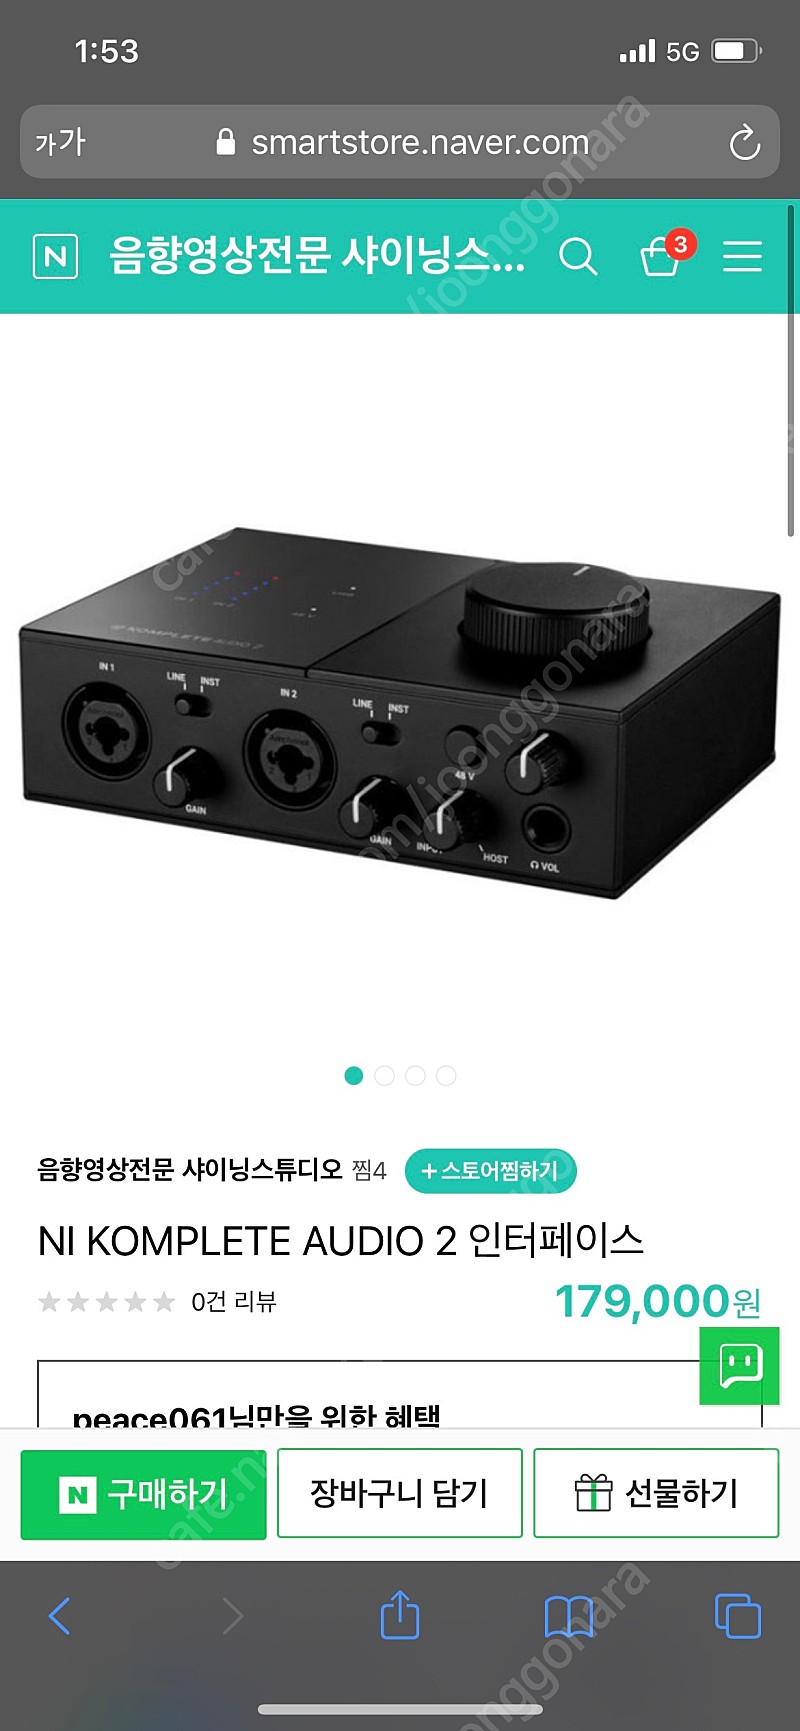 NI Complete Audio 2 오디오 인터페이스 미개봉 신품 싸게 판매합니다.